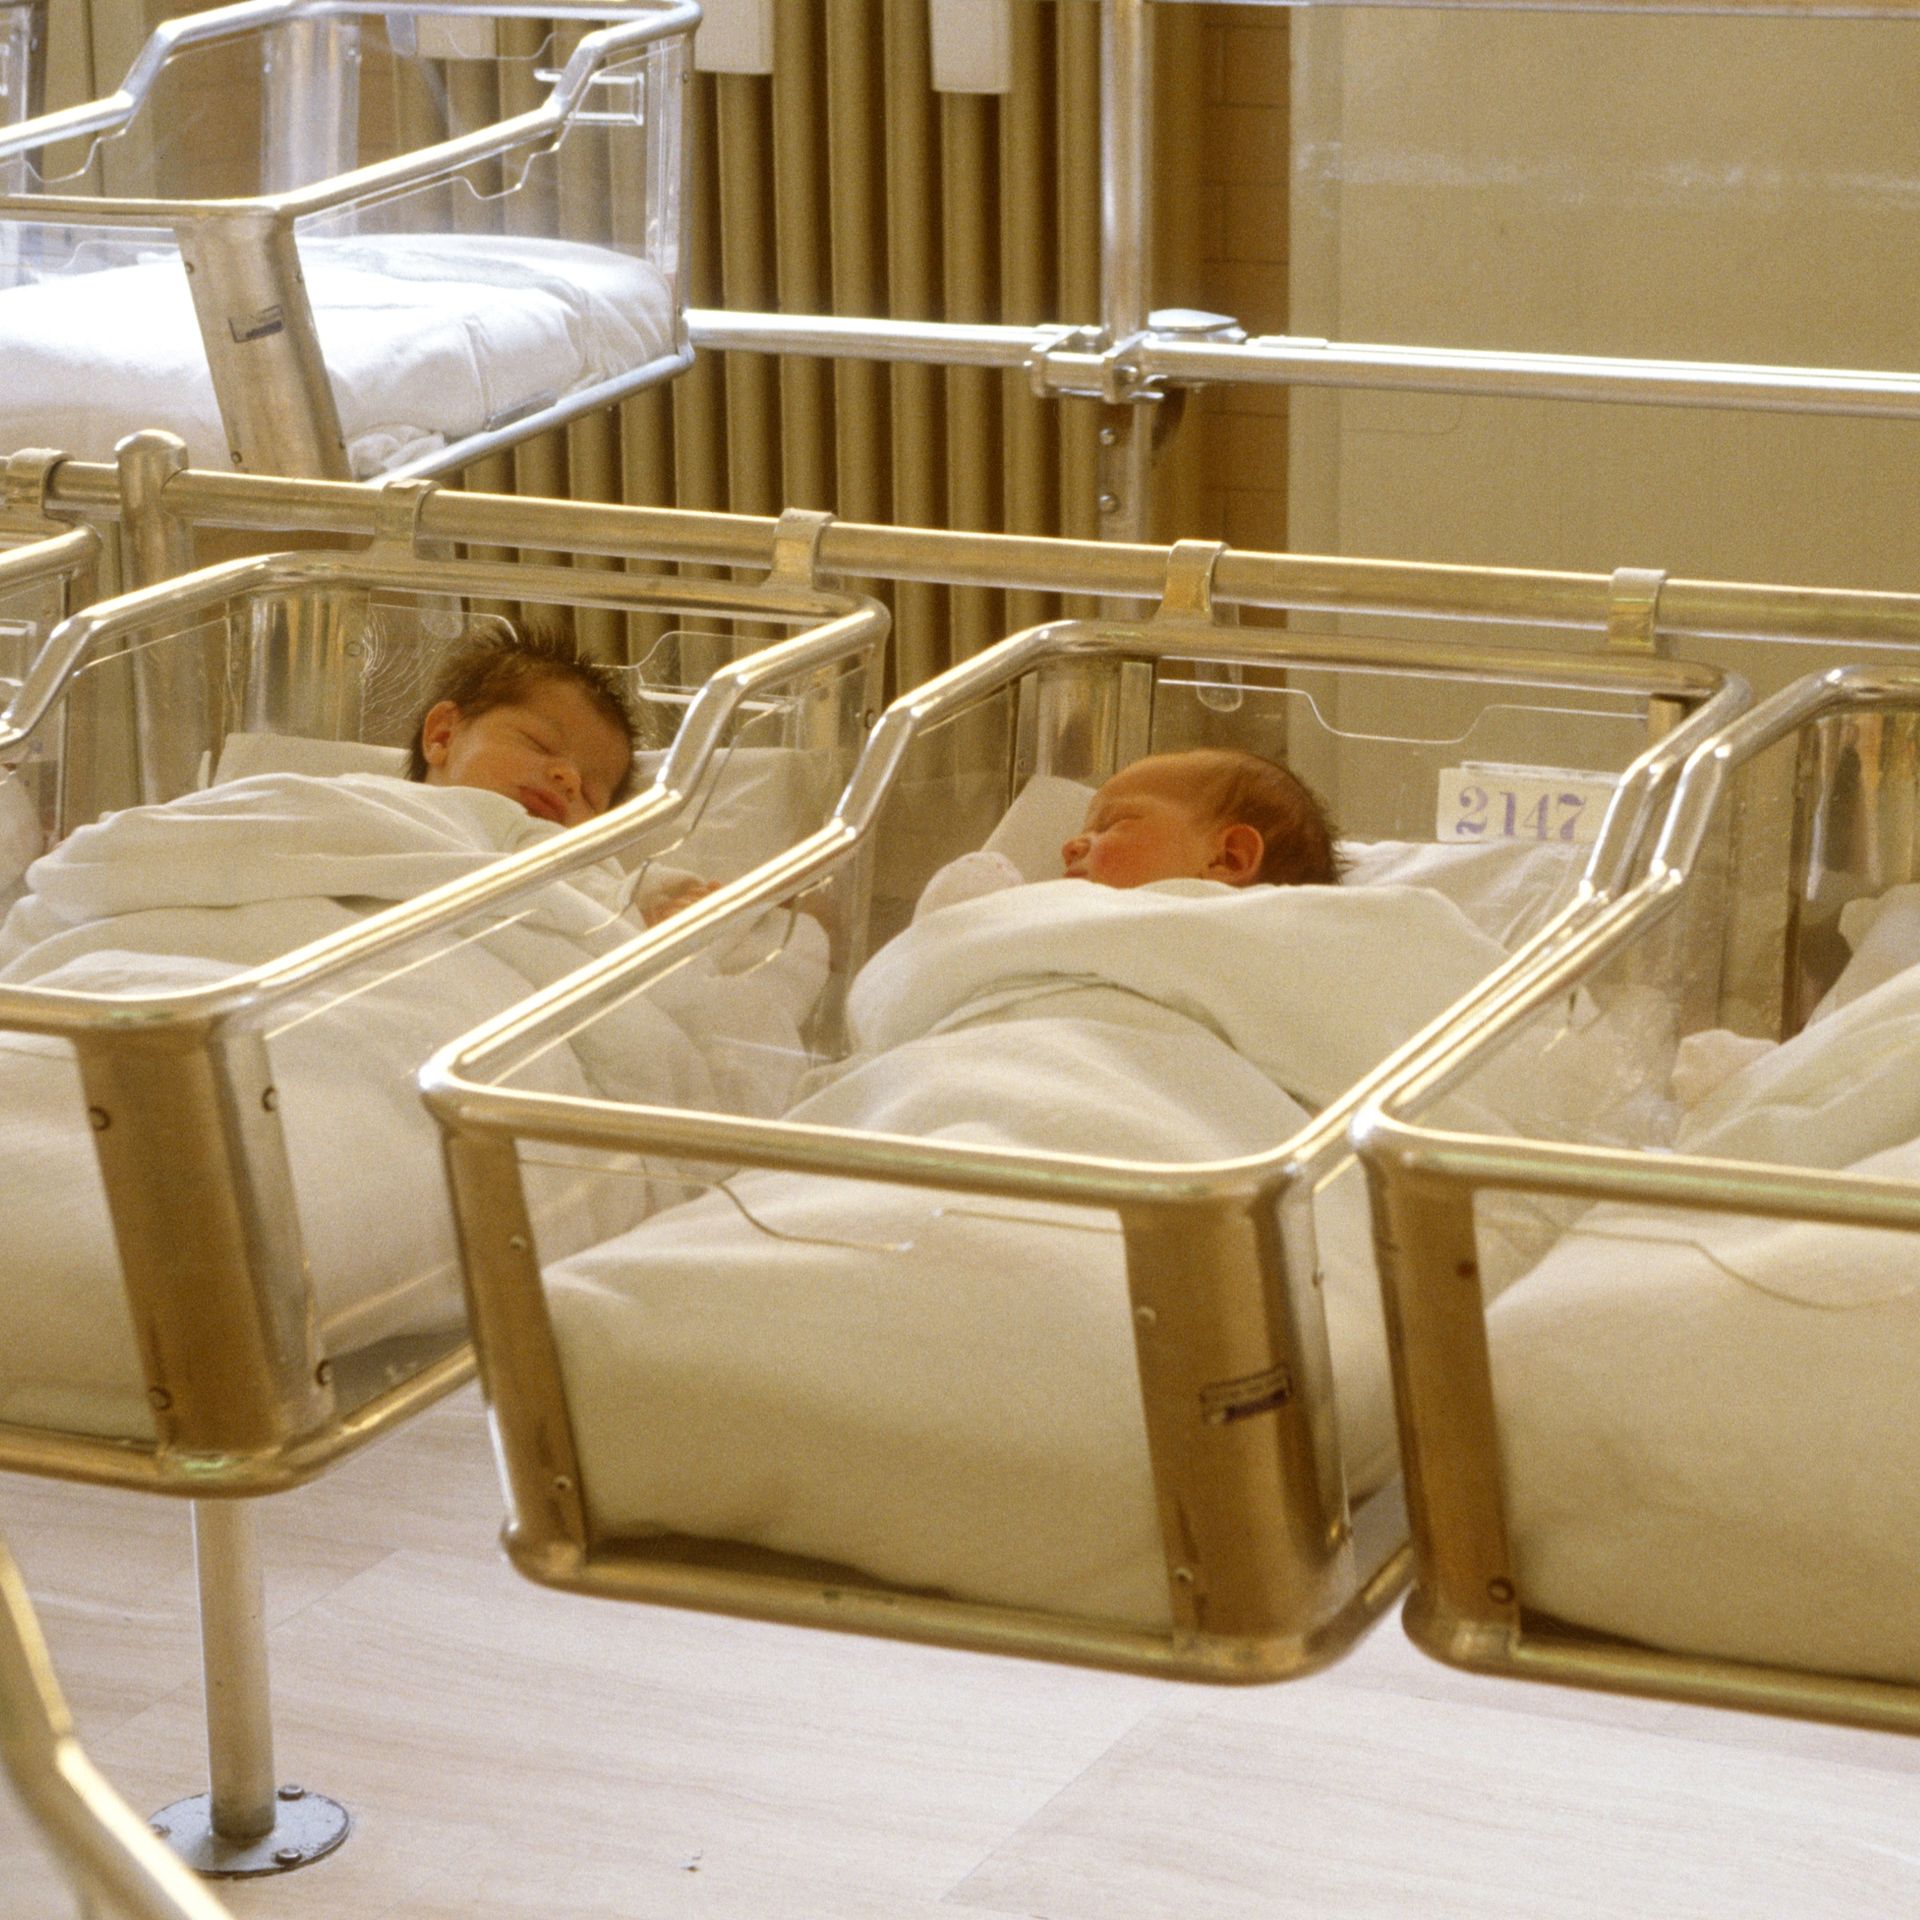 Newborn babies sleep in a hospital nursery.